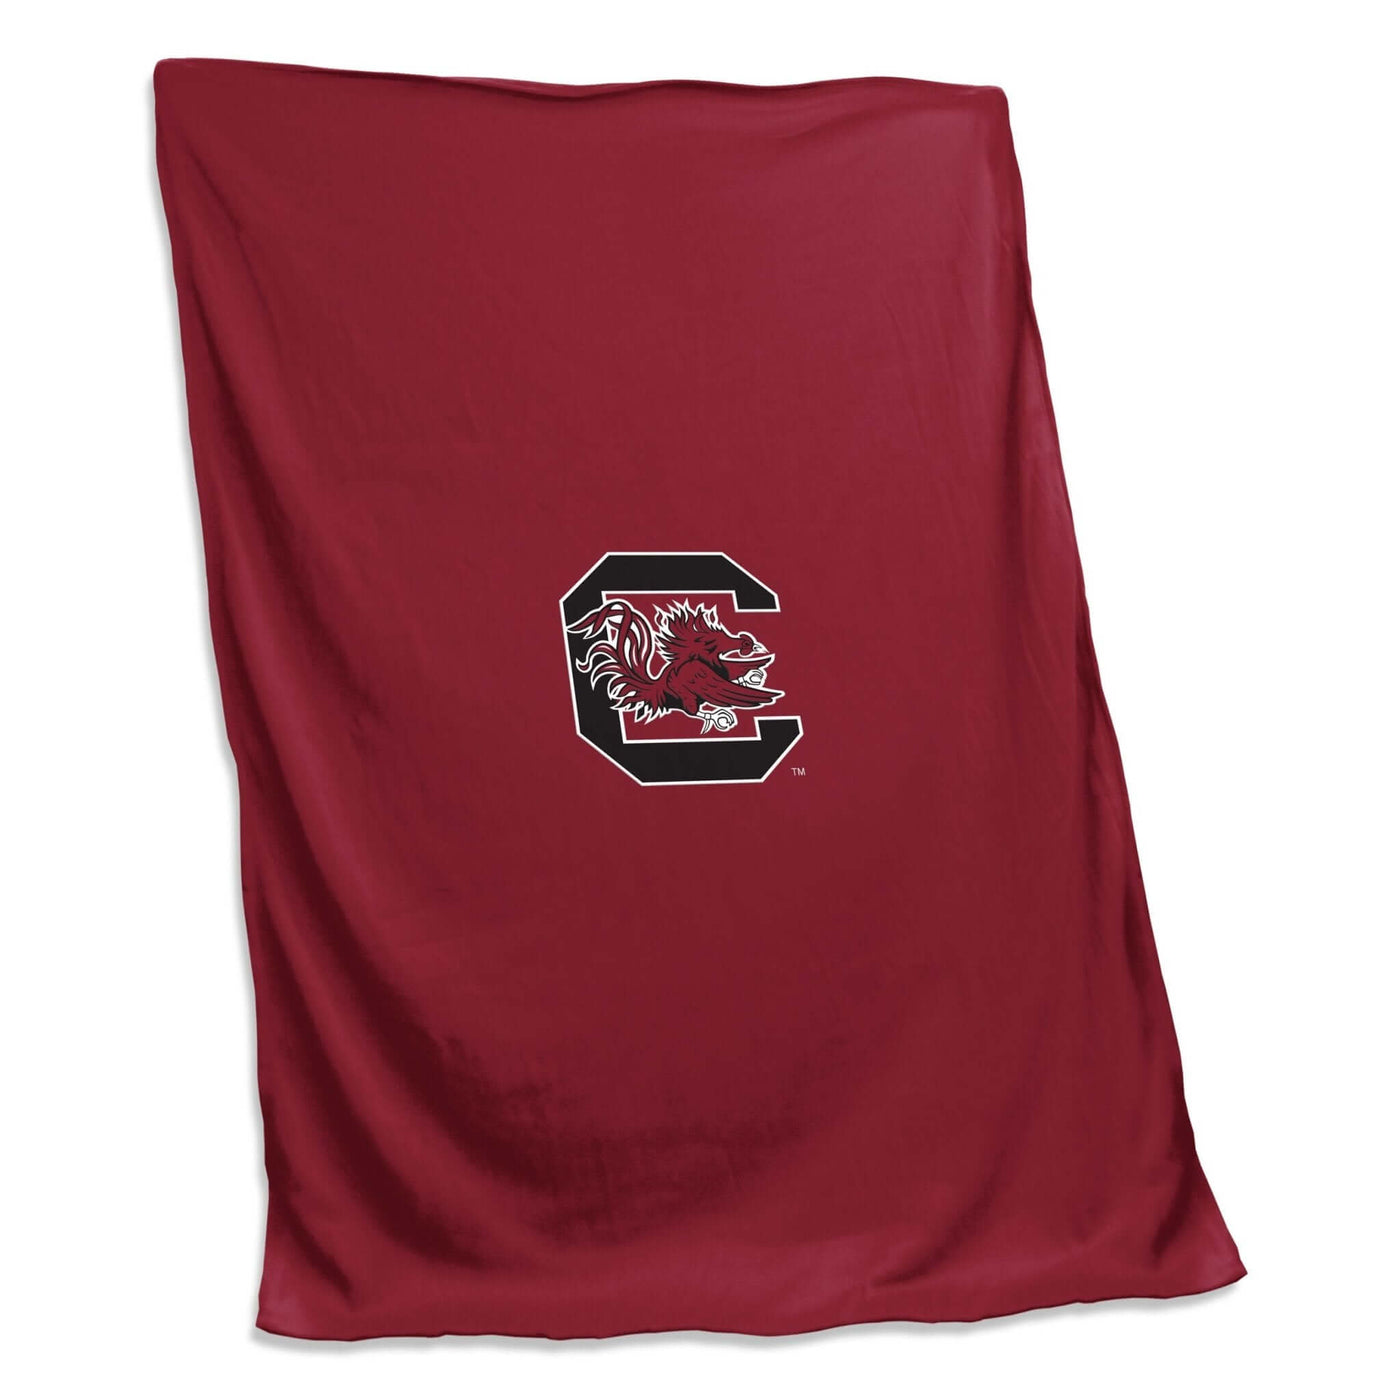 South Carolina Sweatshirt Blanket - Logo Brands